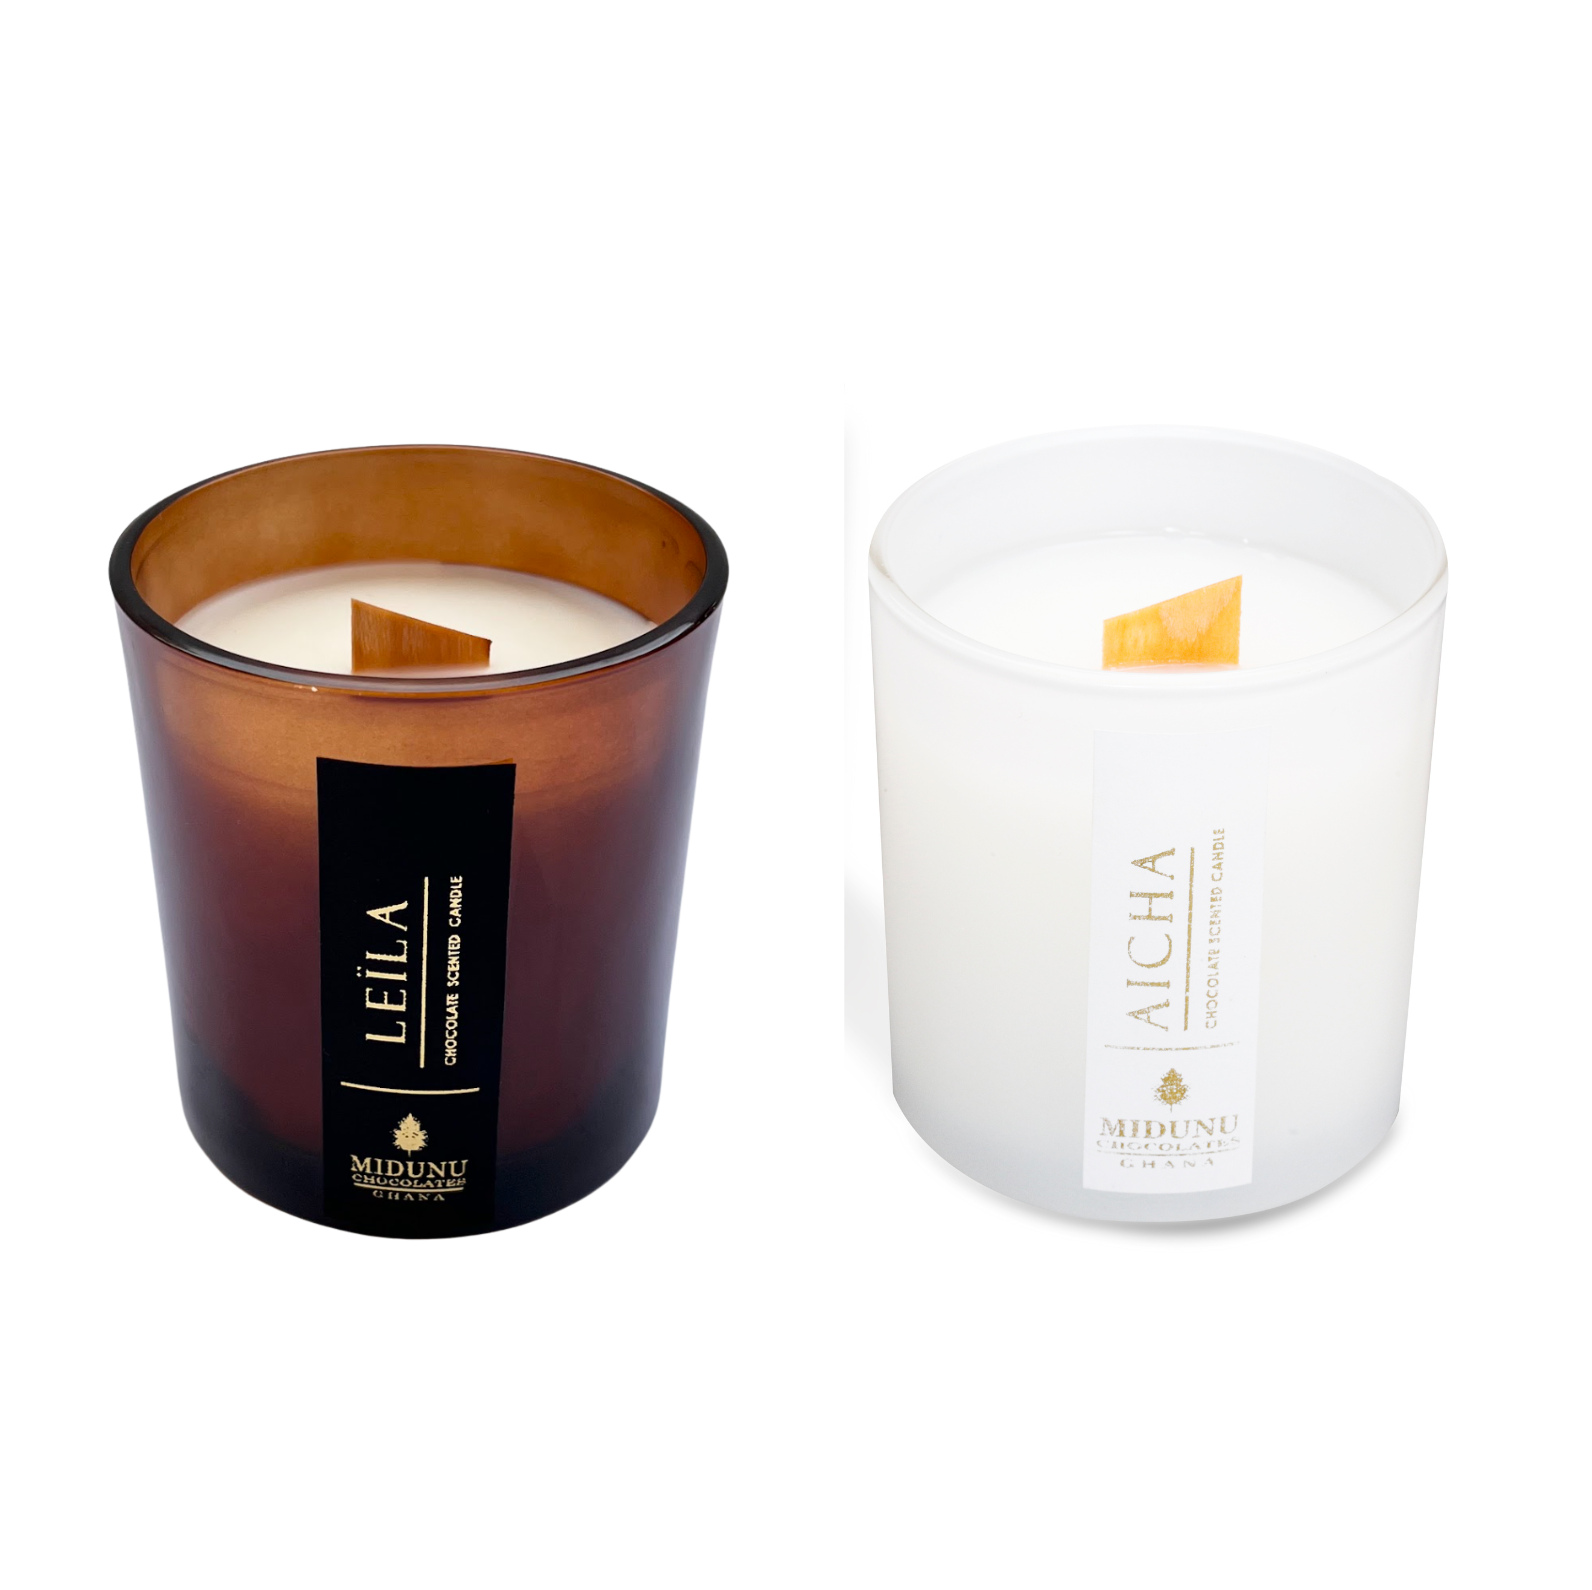 Duo of Candles Gift Box | Midunu x byTalata